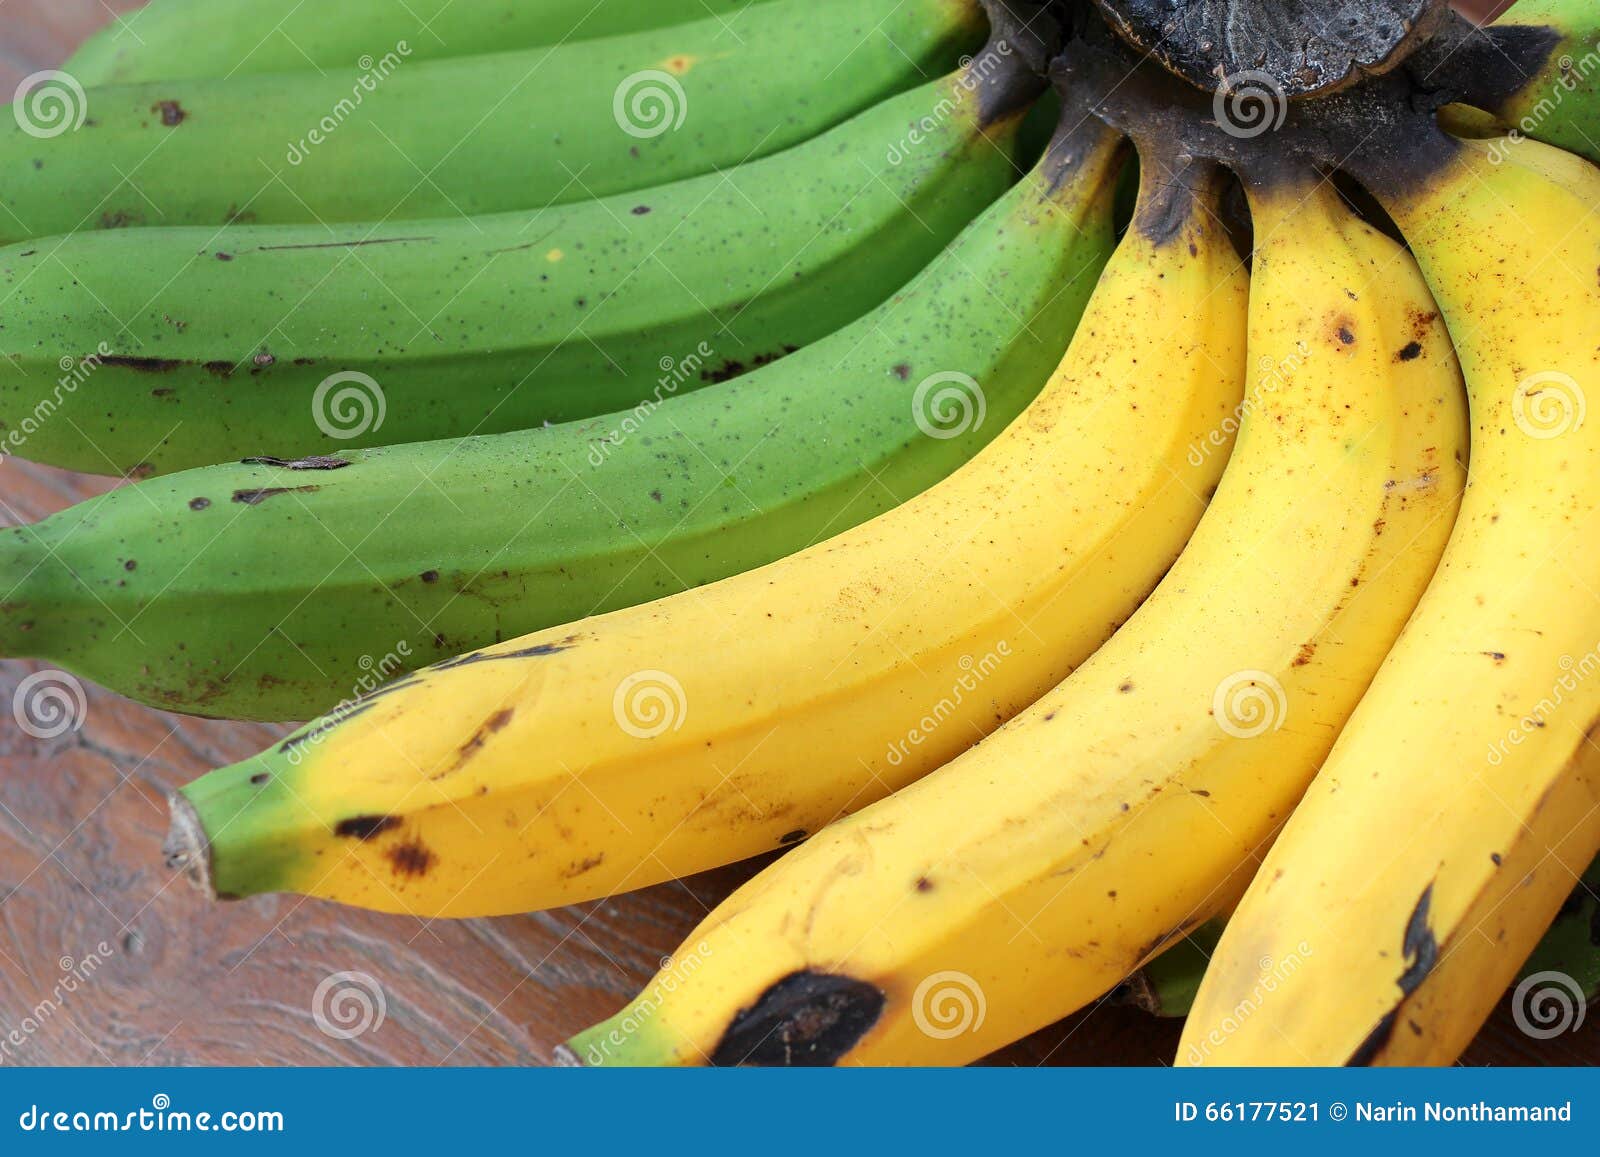 https://thumbs.dreamstime.com/z/fresh-organic-ripe-bananas-raw-bananas-one-banana-bunch-wooden-picnic-table-66177521.jpg